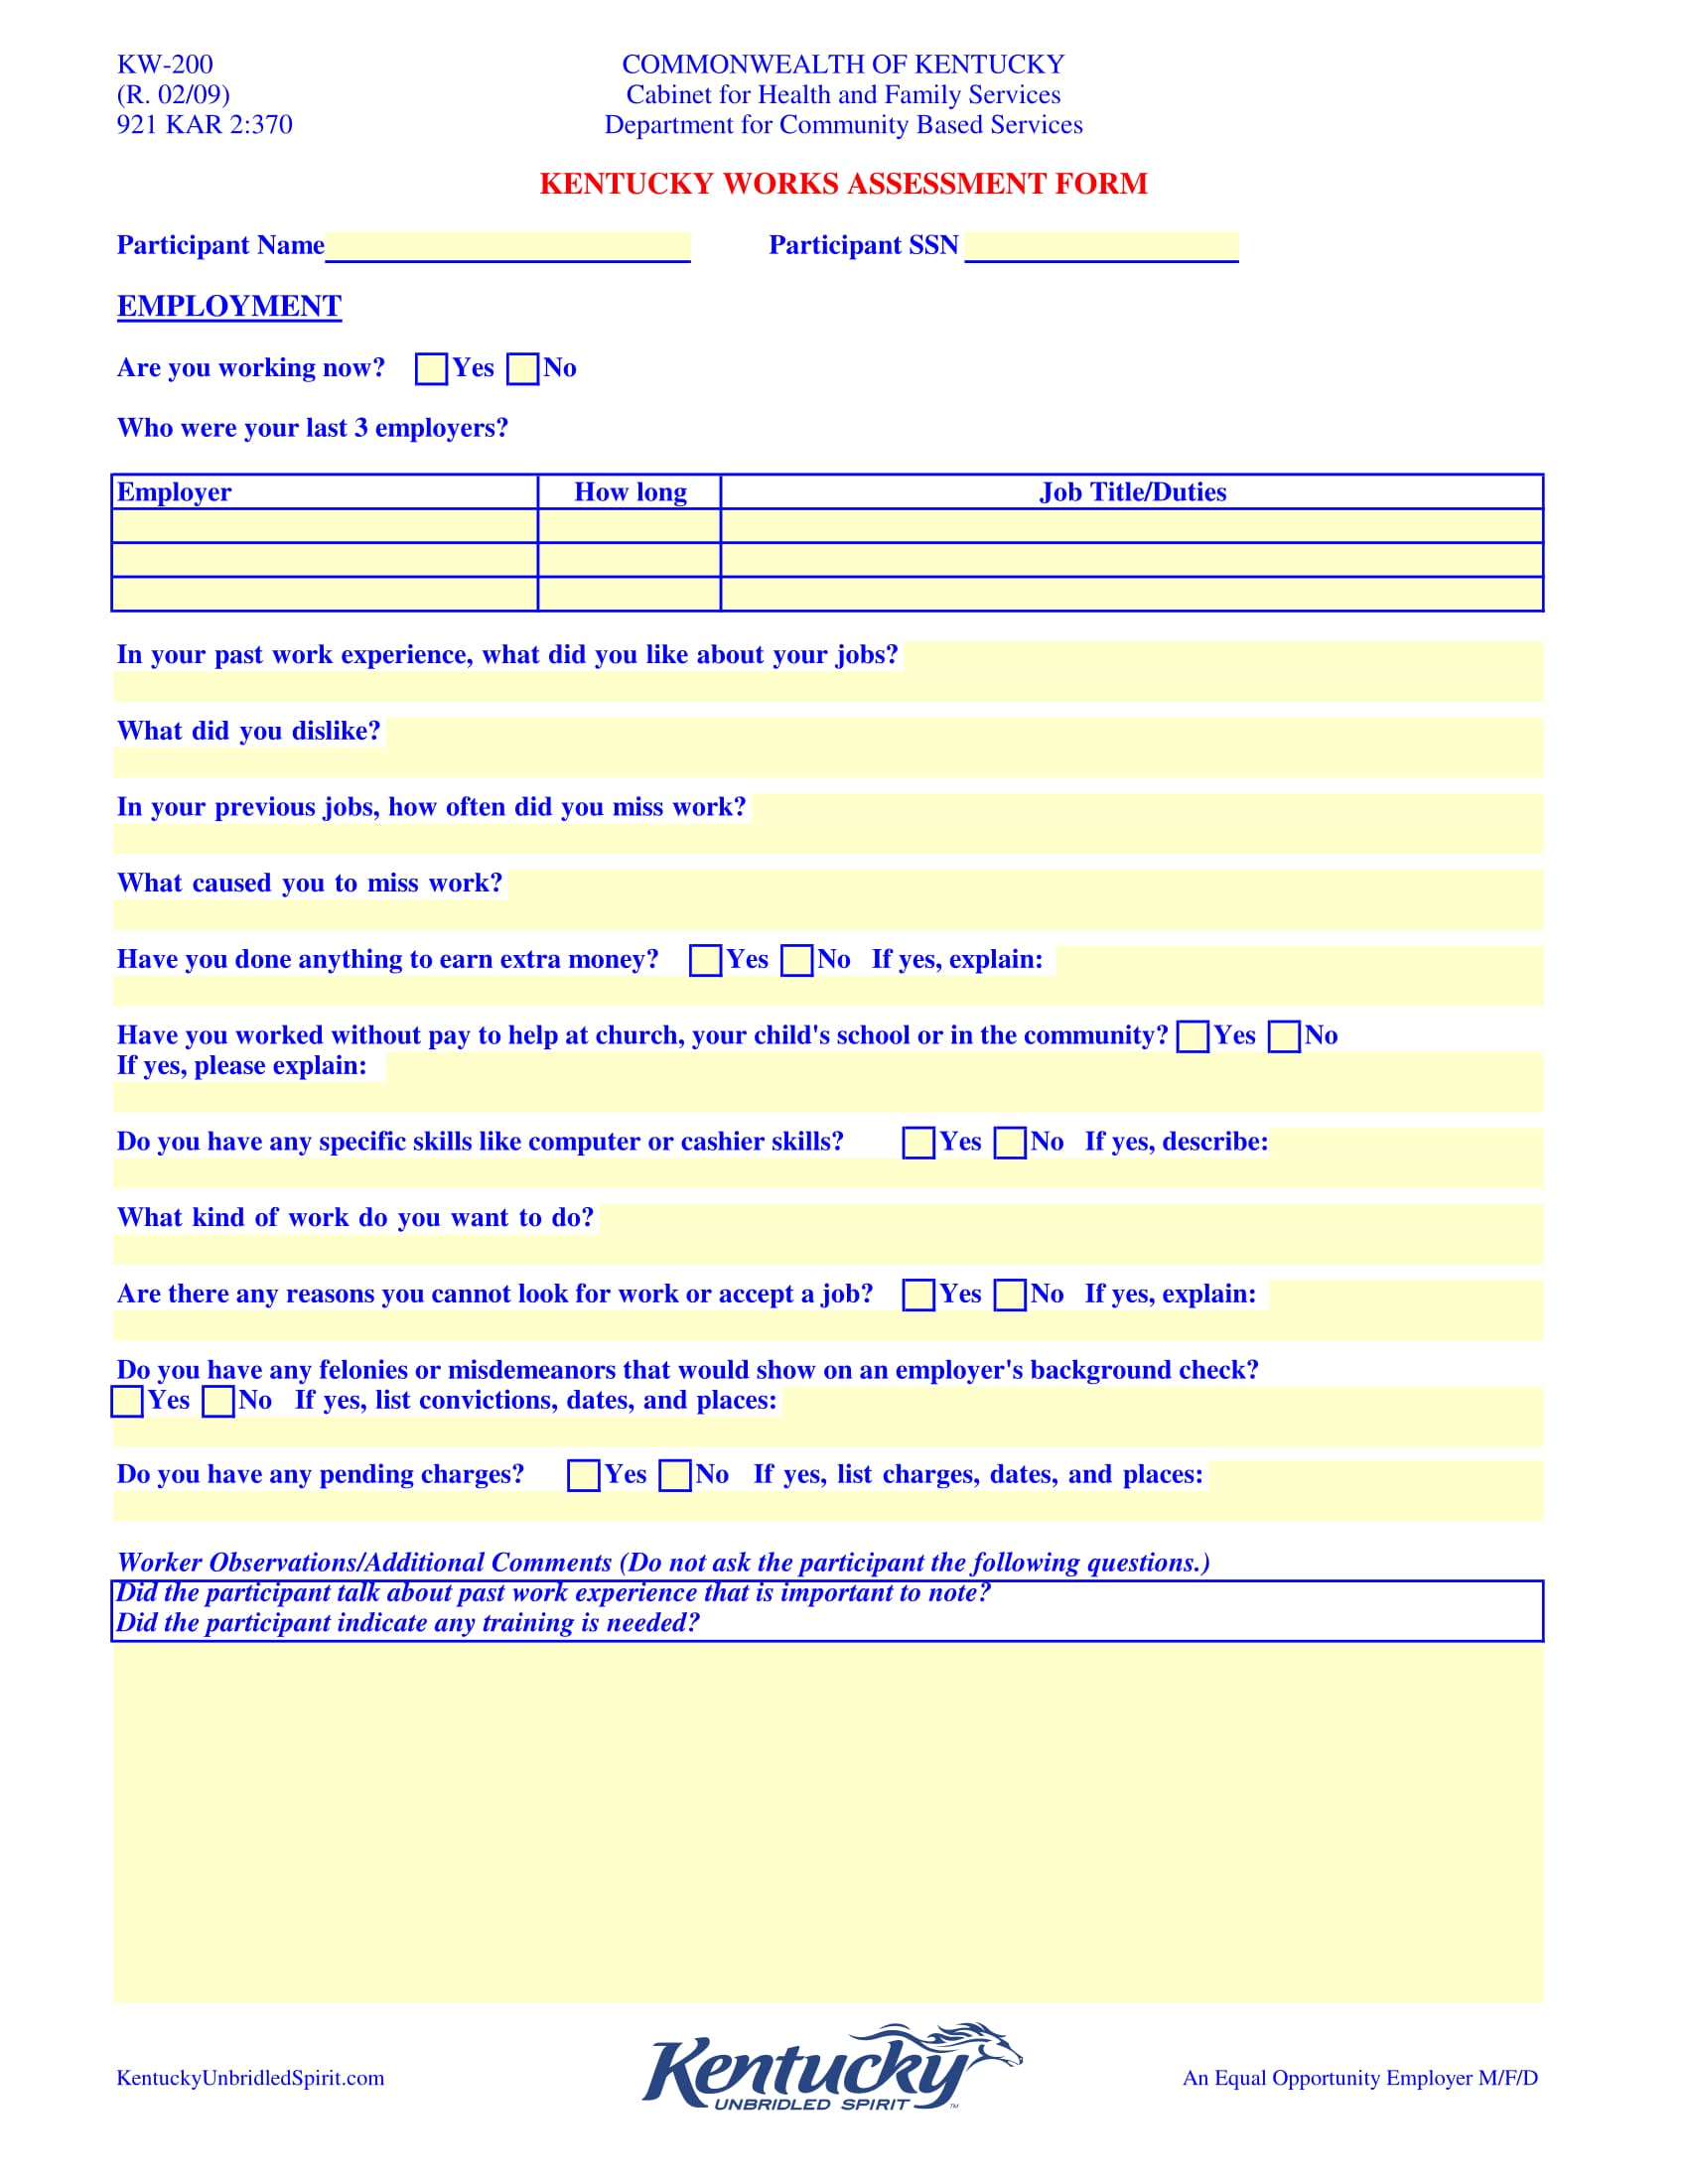 kw 200 kentucky works assessment form 1